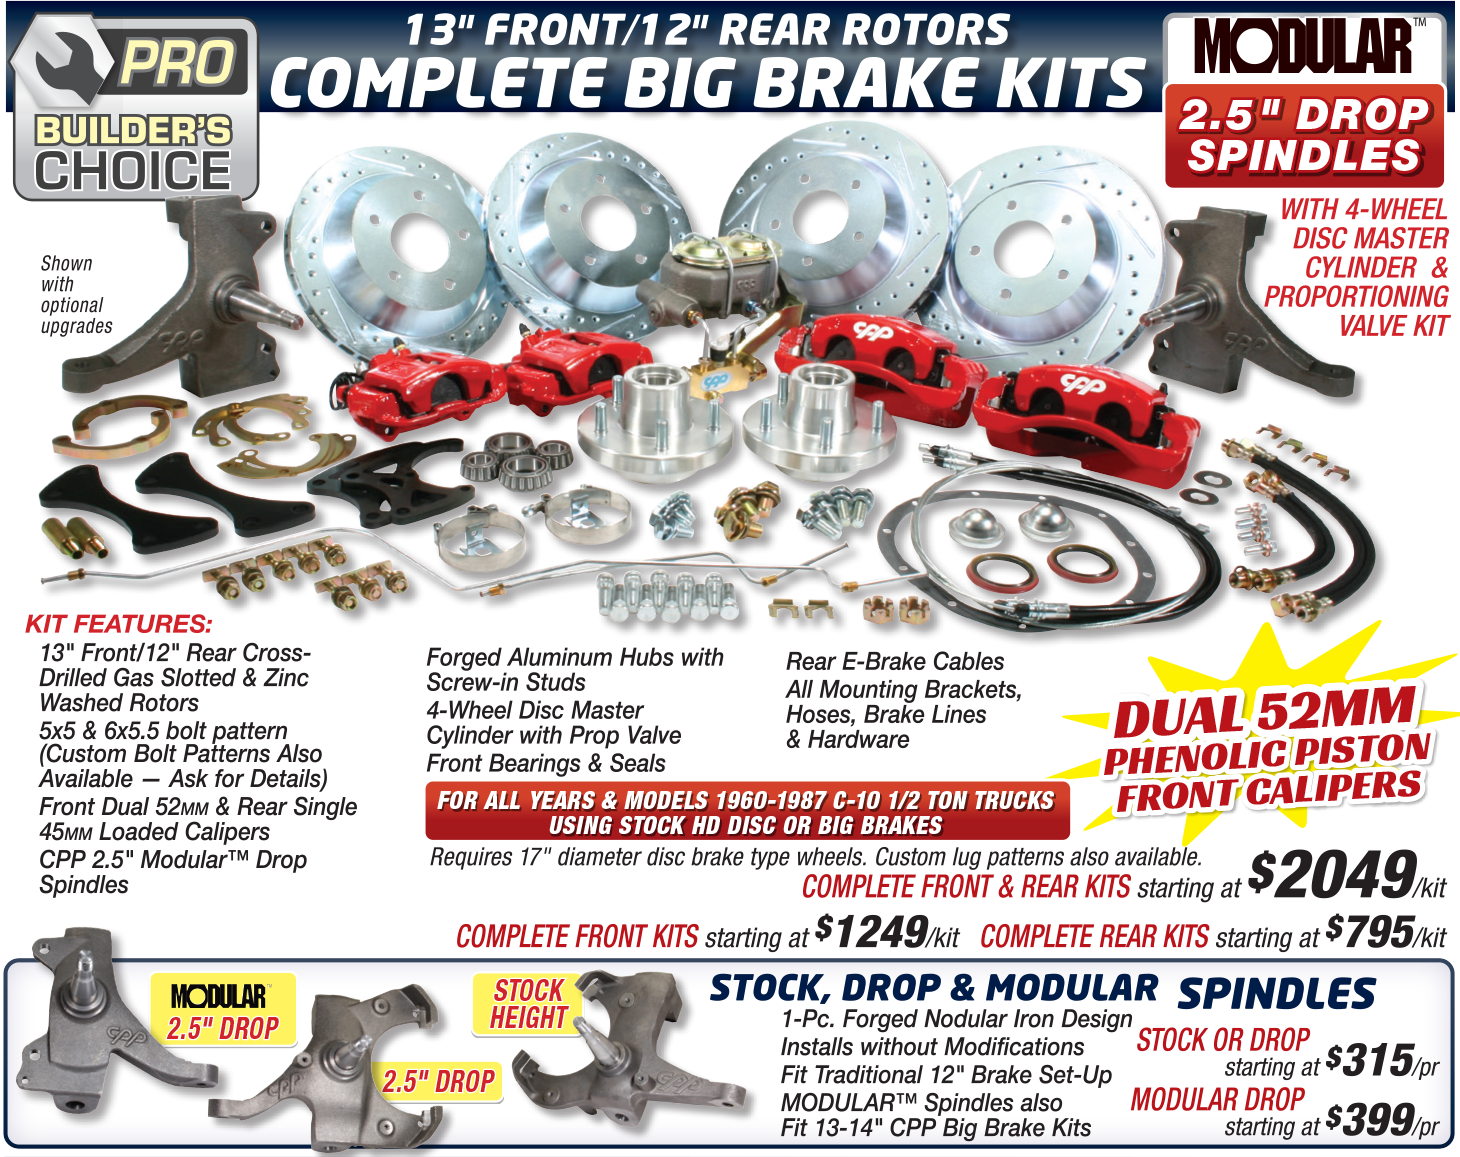 Complete Big Brake Kits